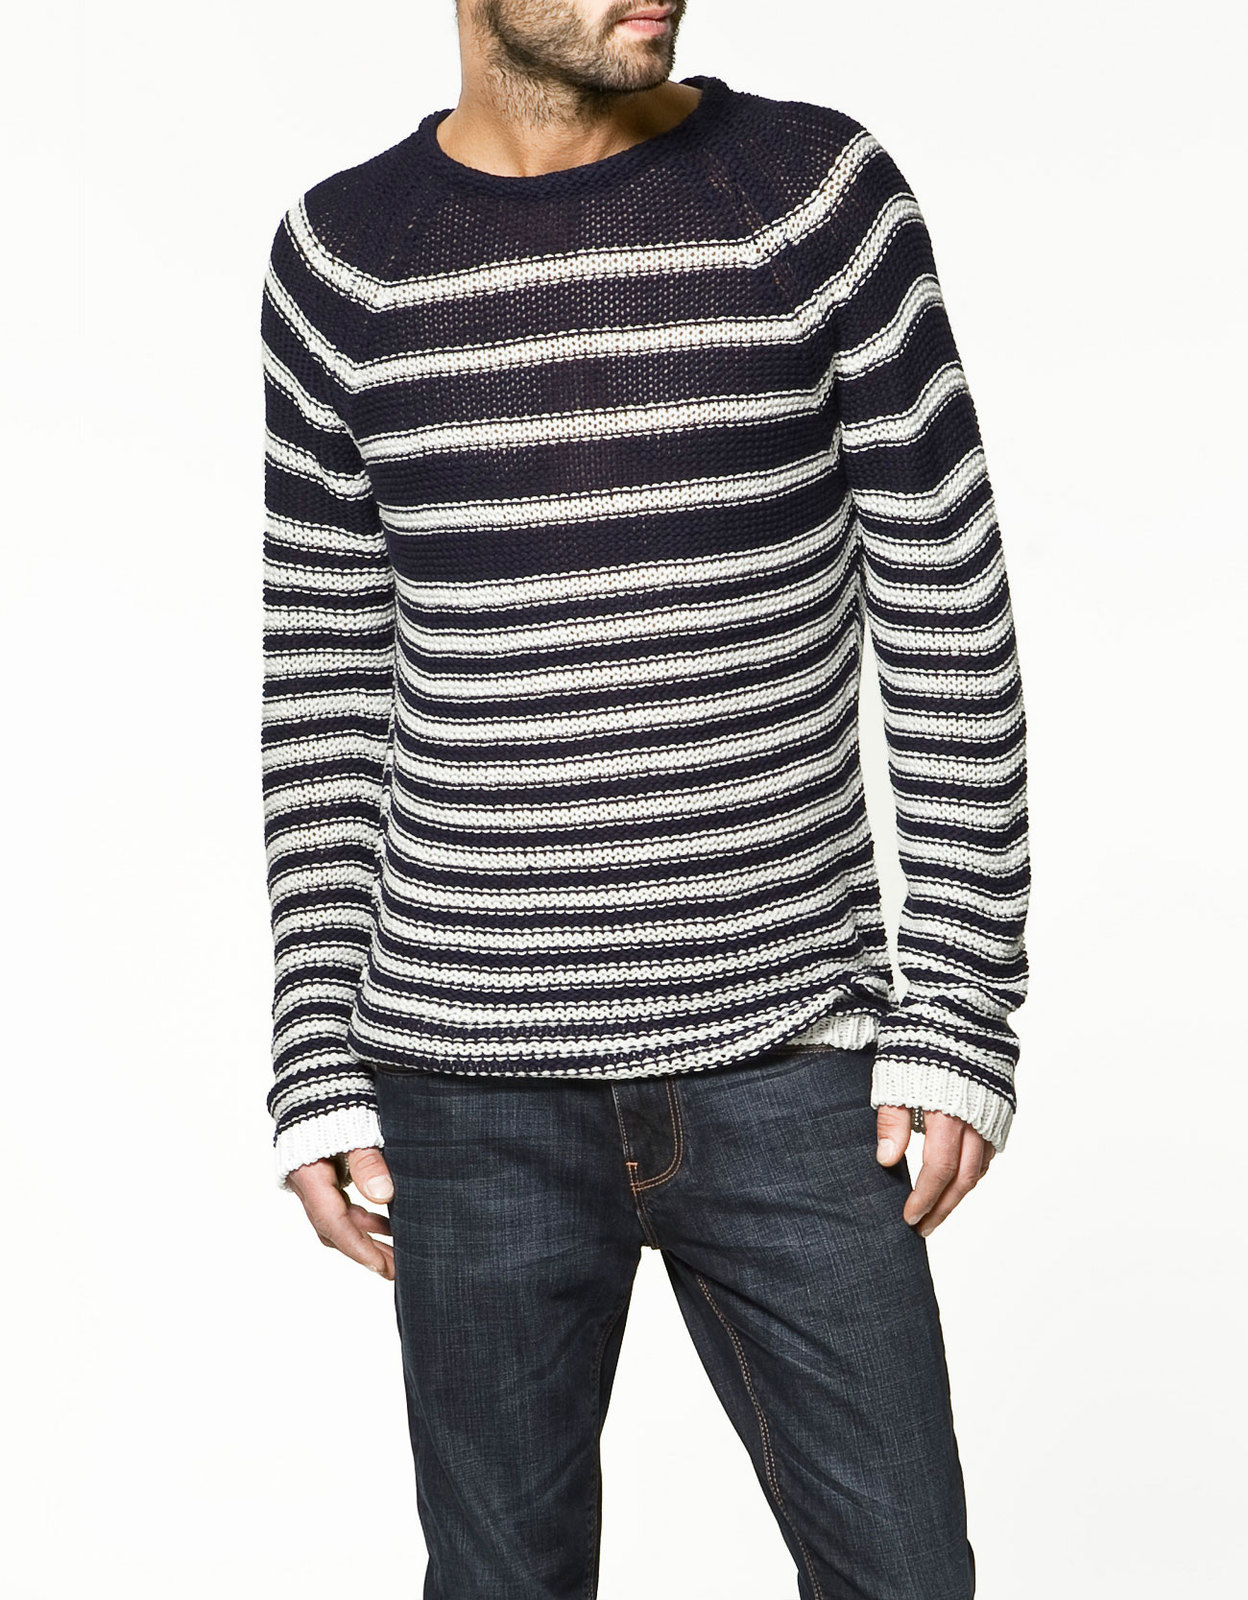 Zara csíkos kötött pulóver fotója